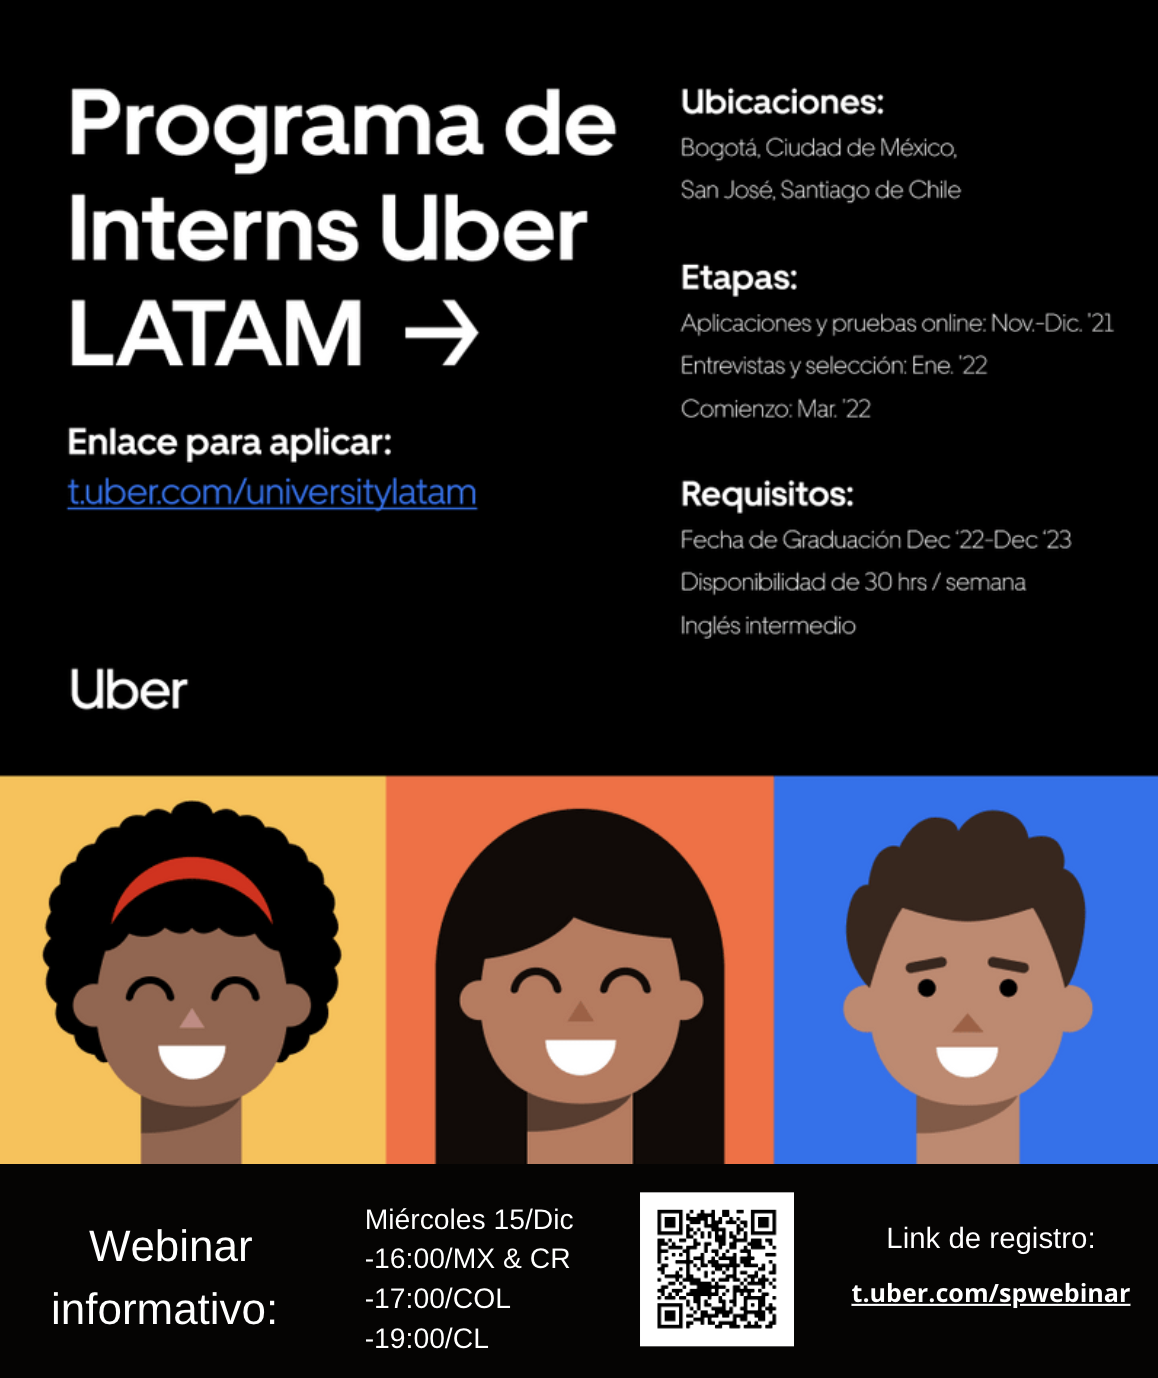 Uber Internship Program LATAM Universidad Anáhuac México